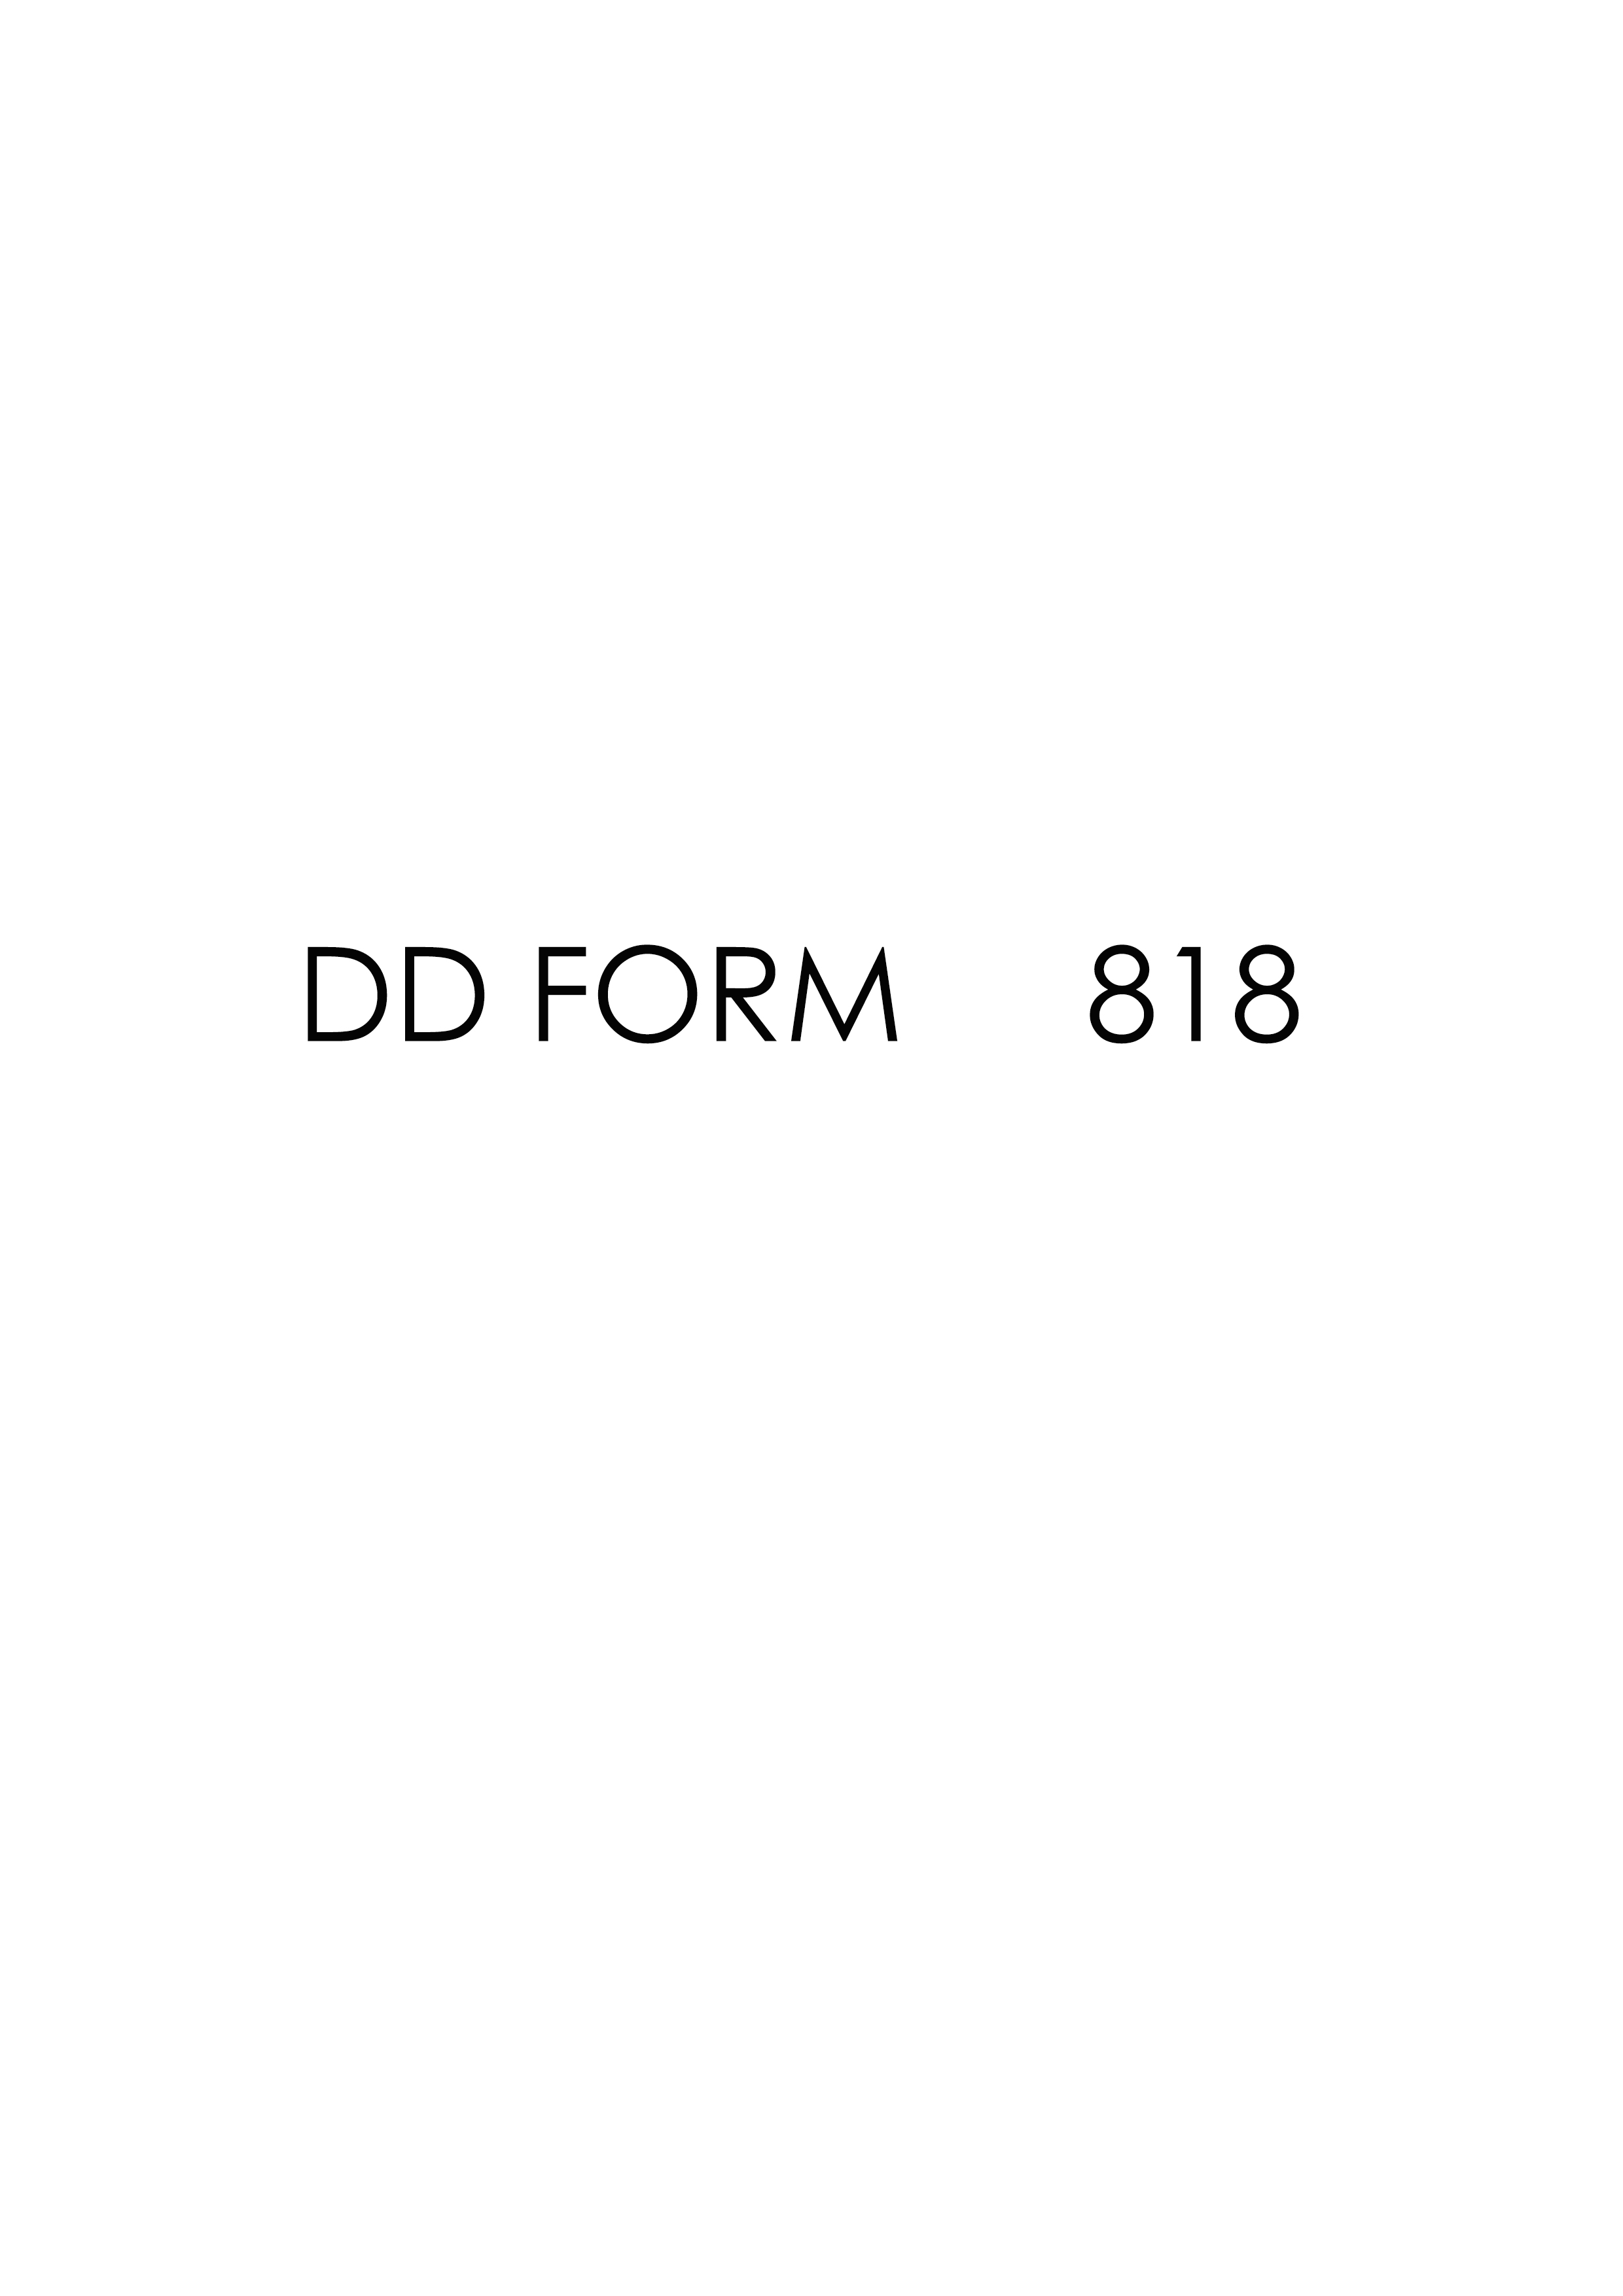 Download dd Form 818